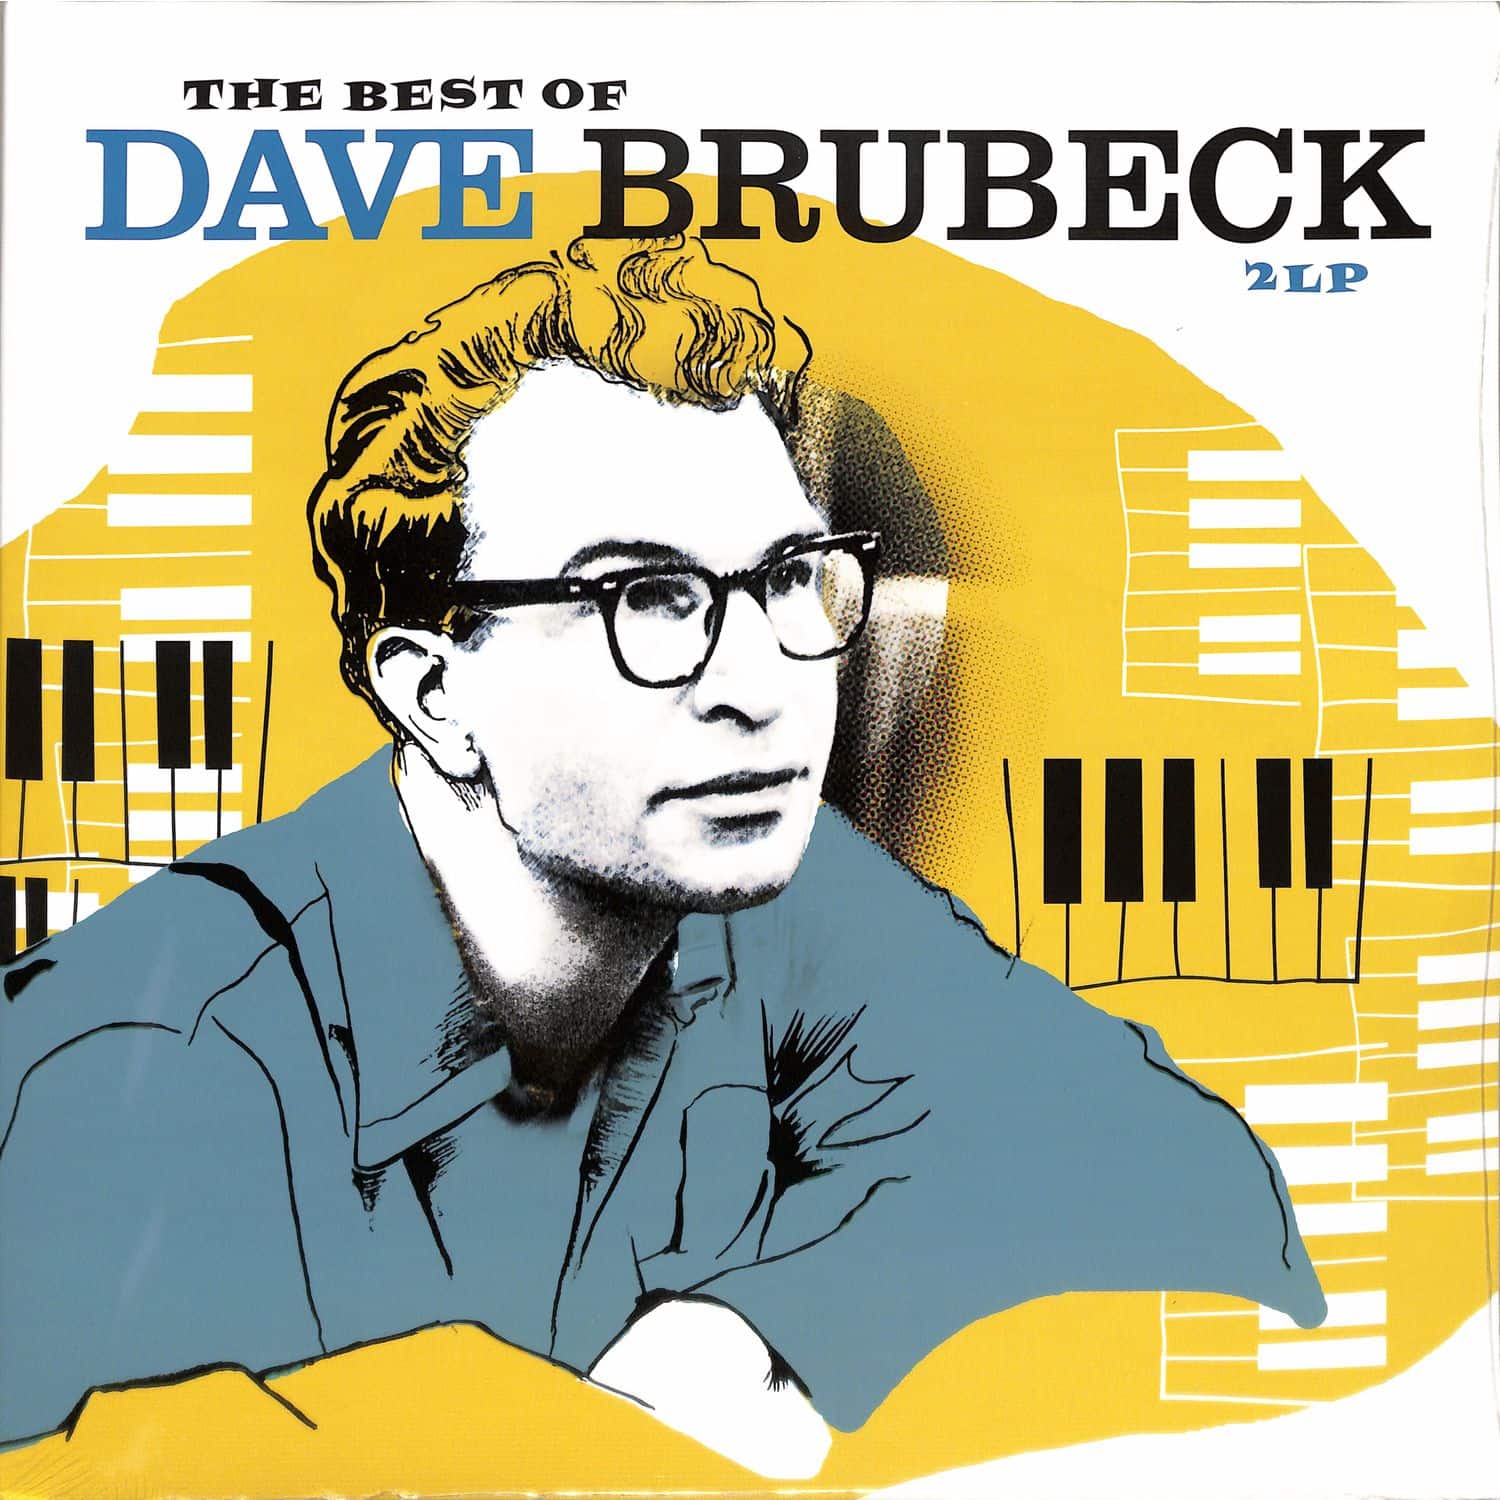 Dave Brubeck - BEST OF 